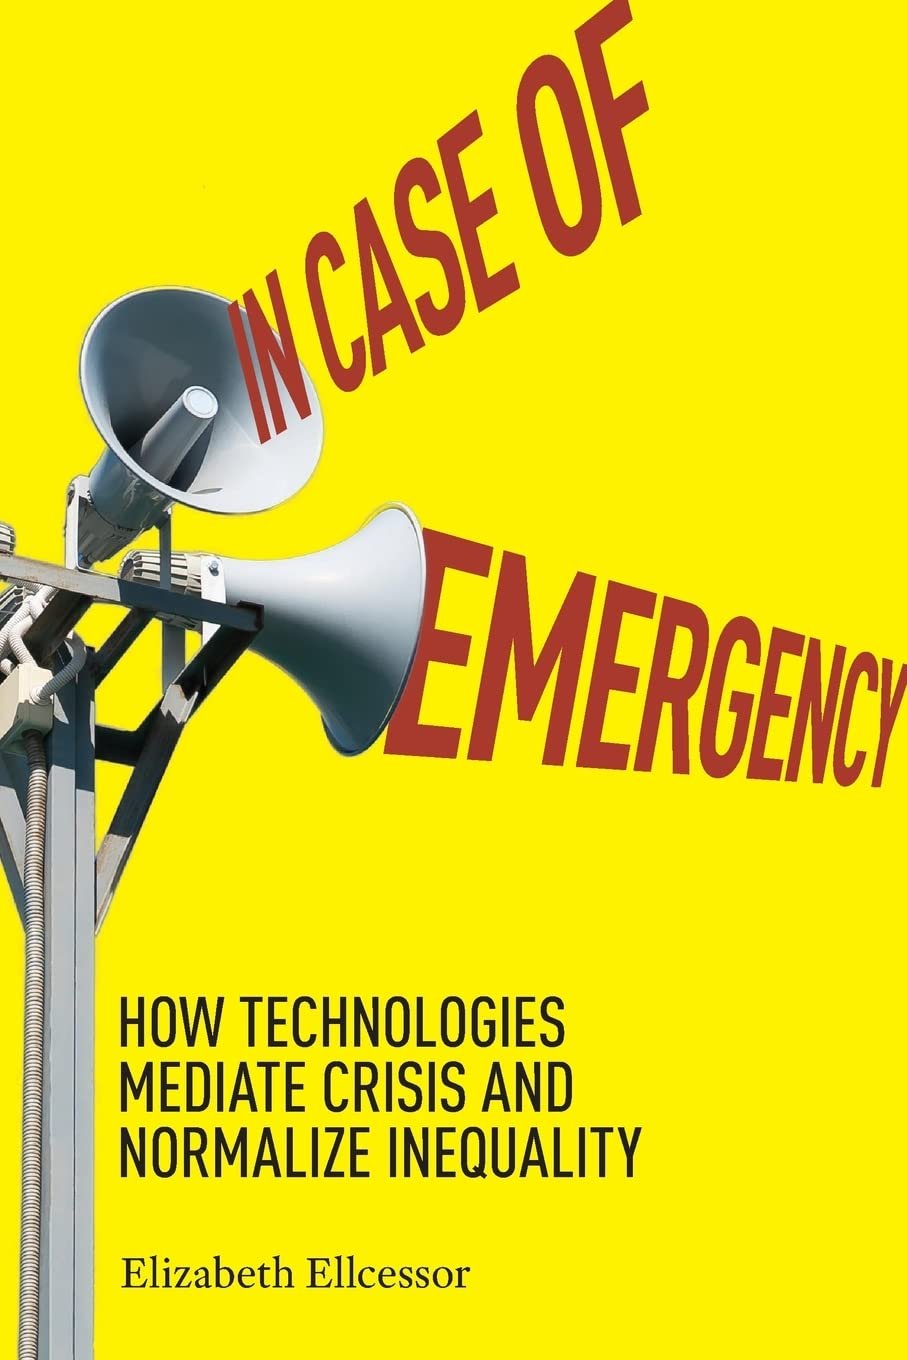 In Case of Emergency by Elizabeth Ellcessor